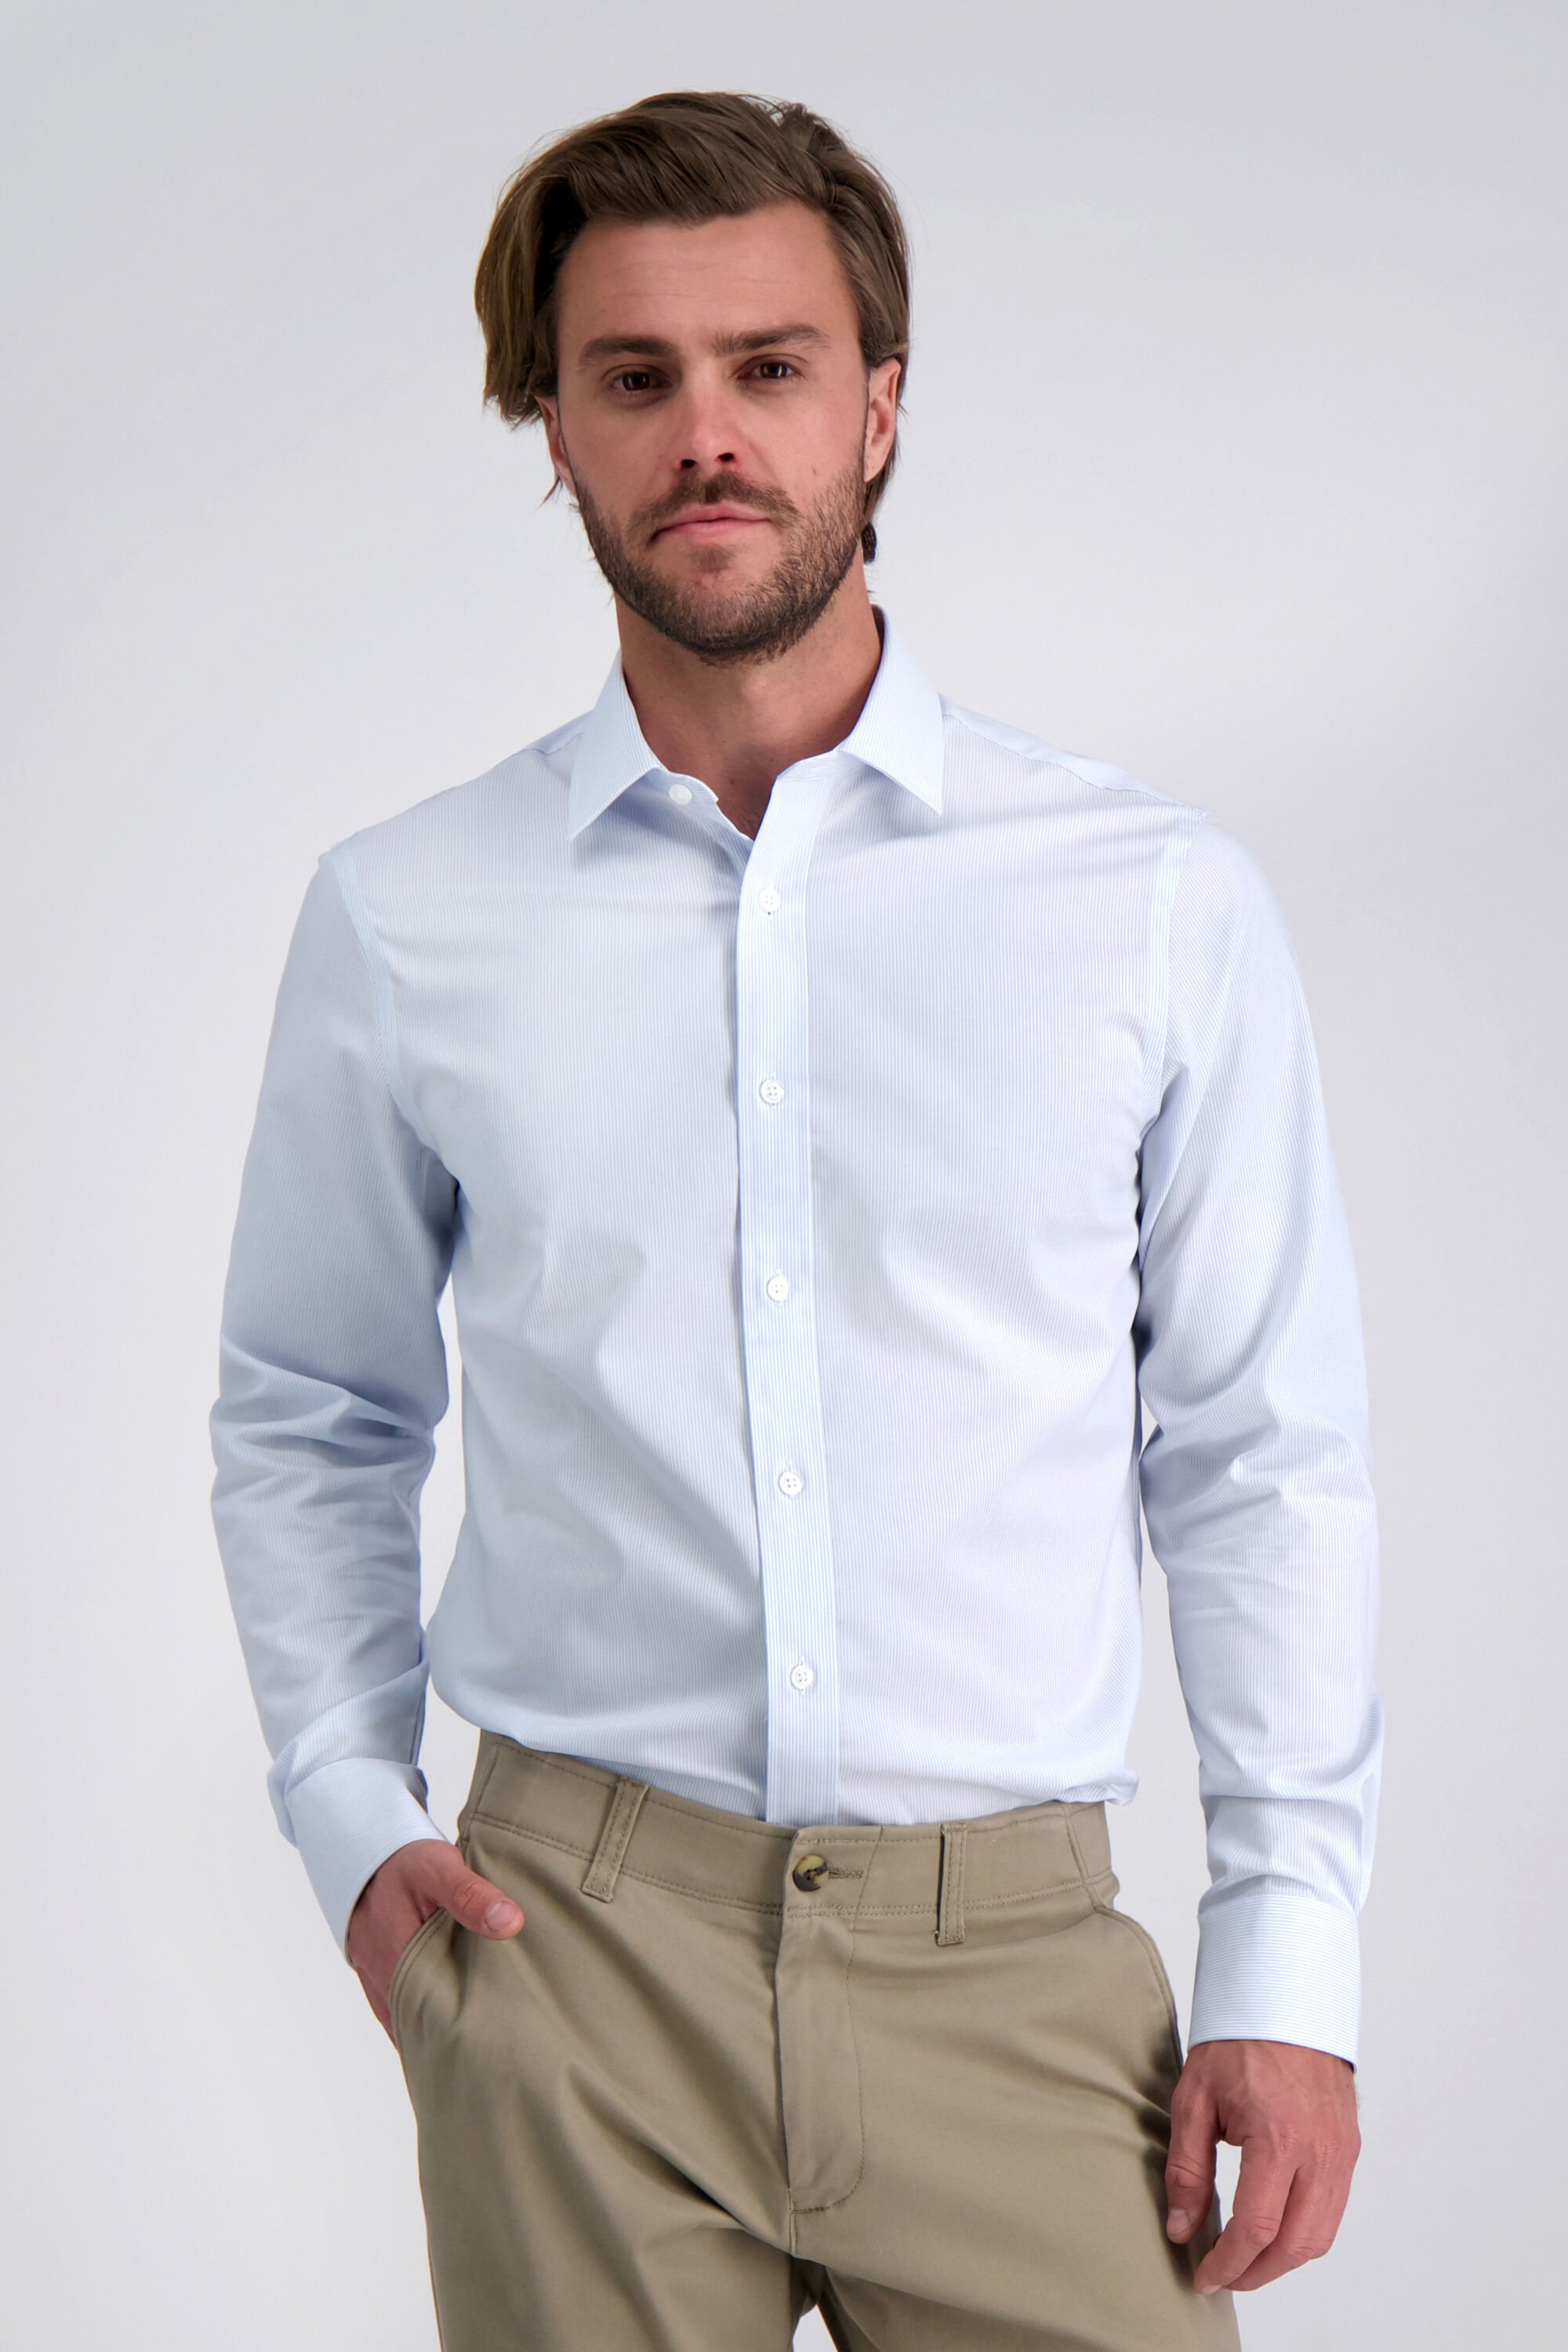 Premium Comfort Performance Cotton Dress Shirt - White & Blue Stripe